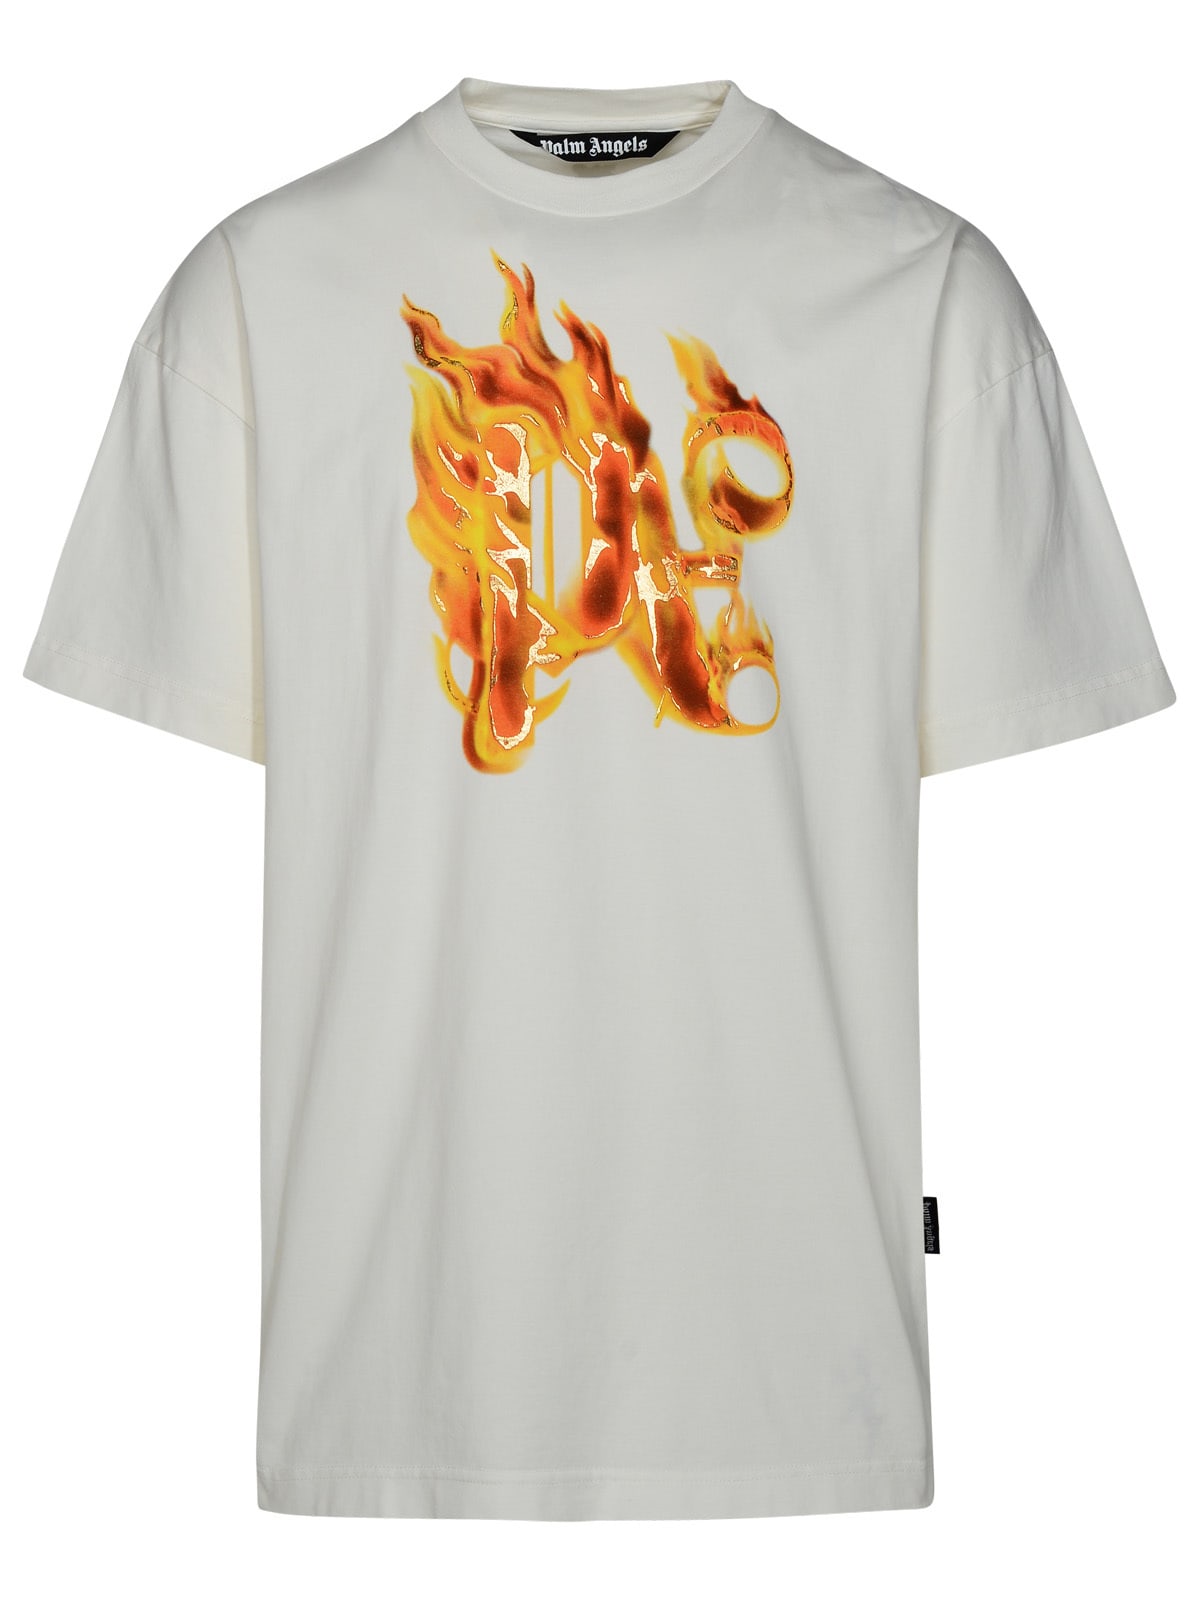 Palm Angels burning Monogram White Cotton T-shirt